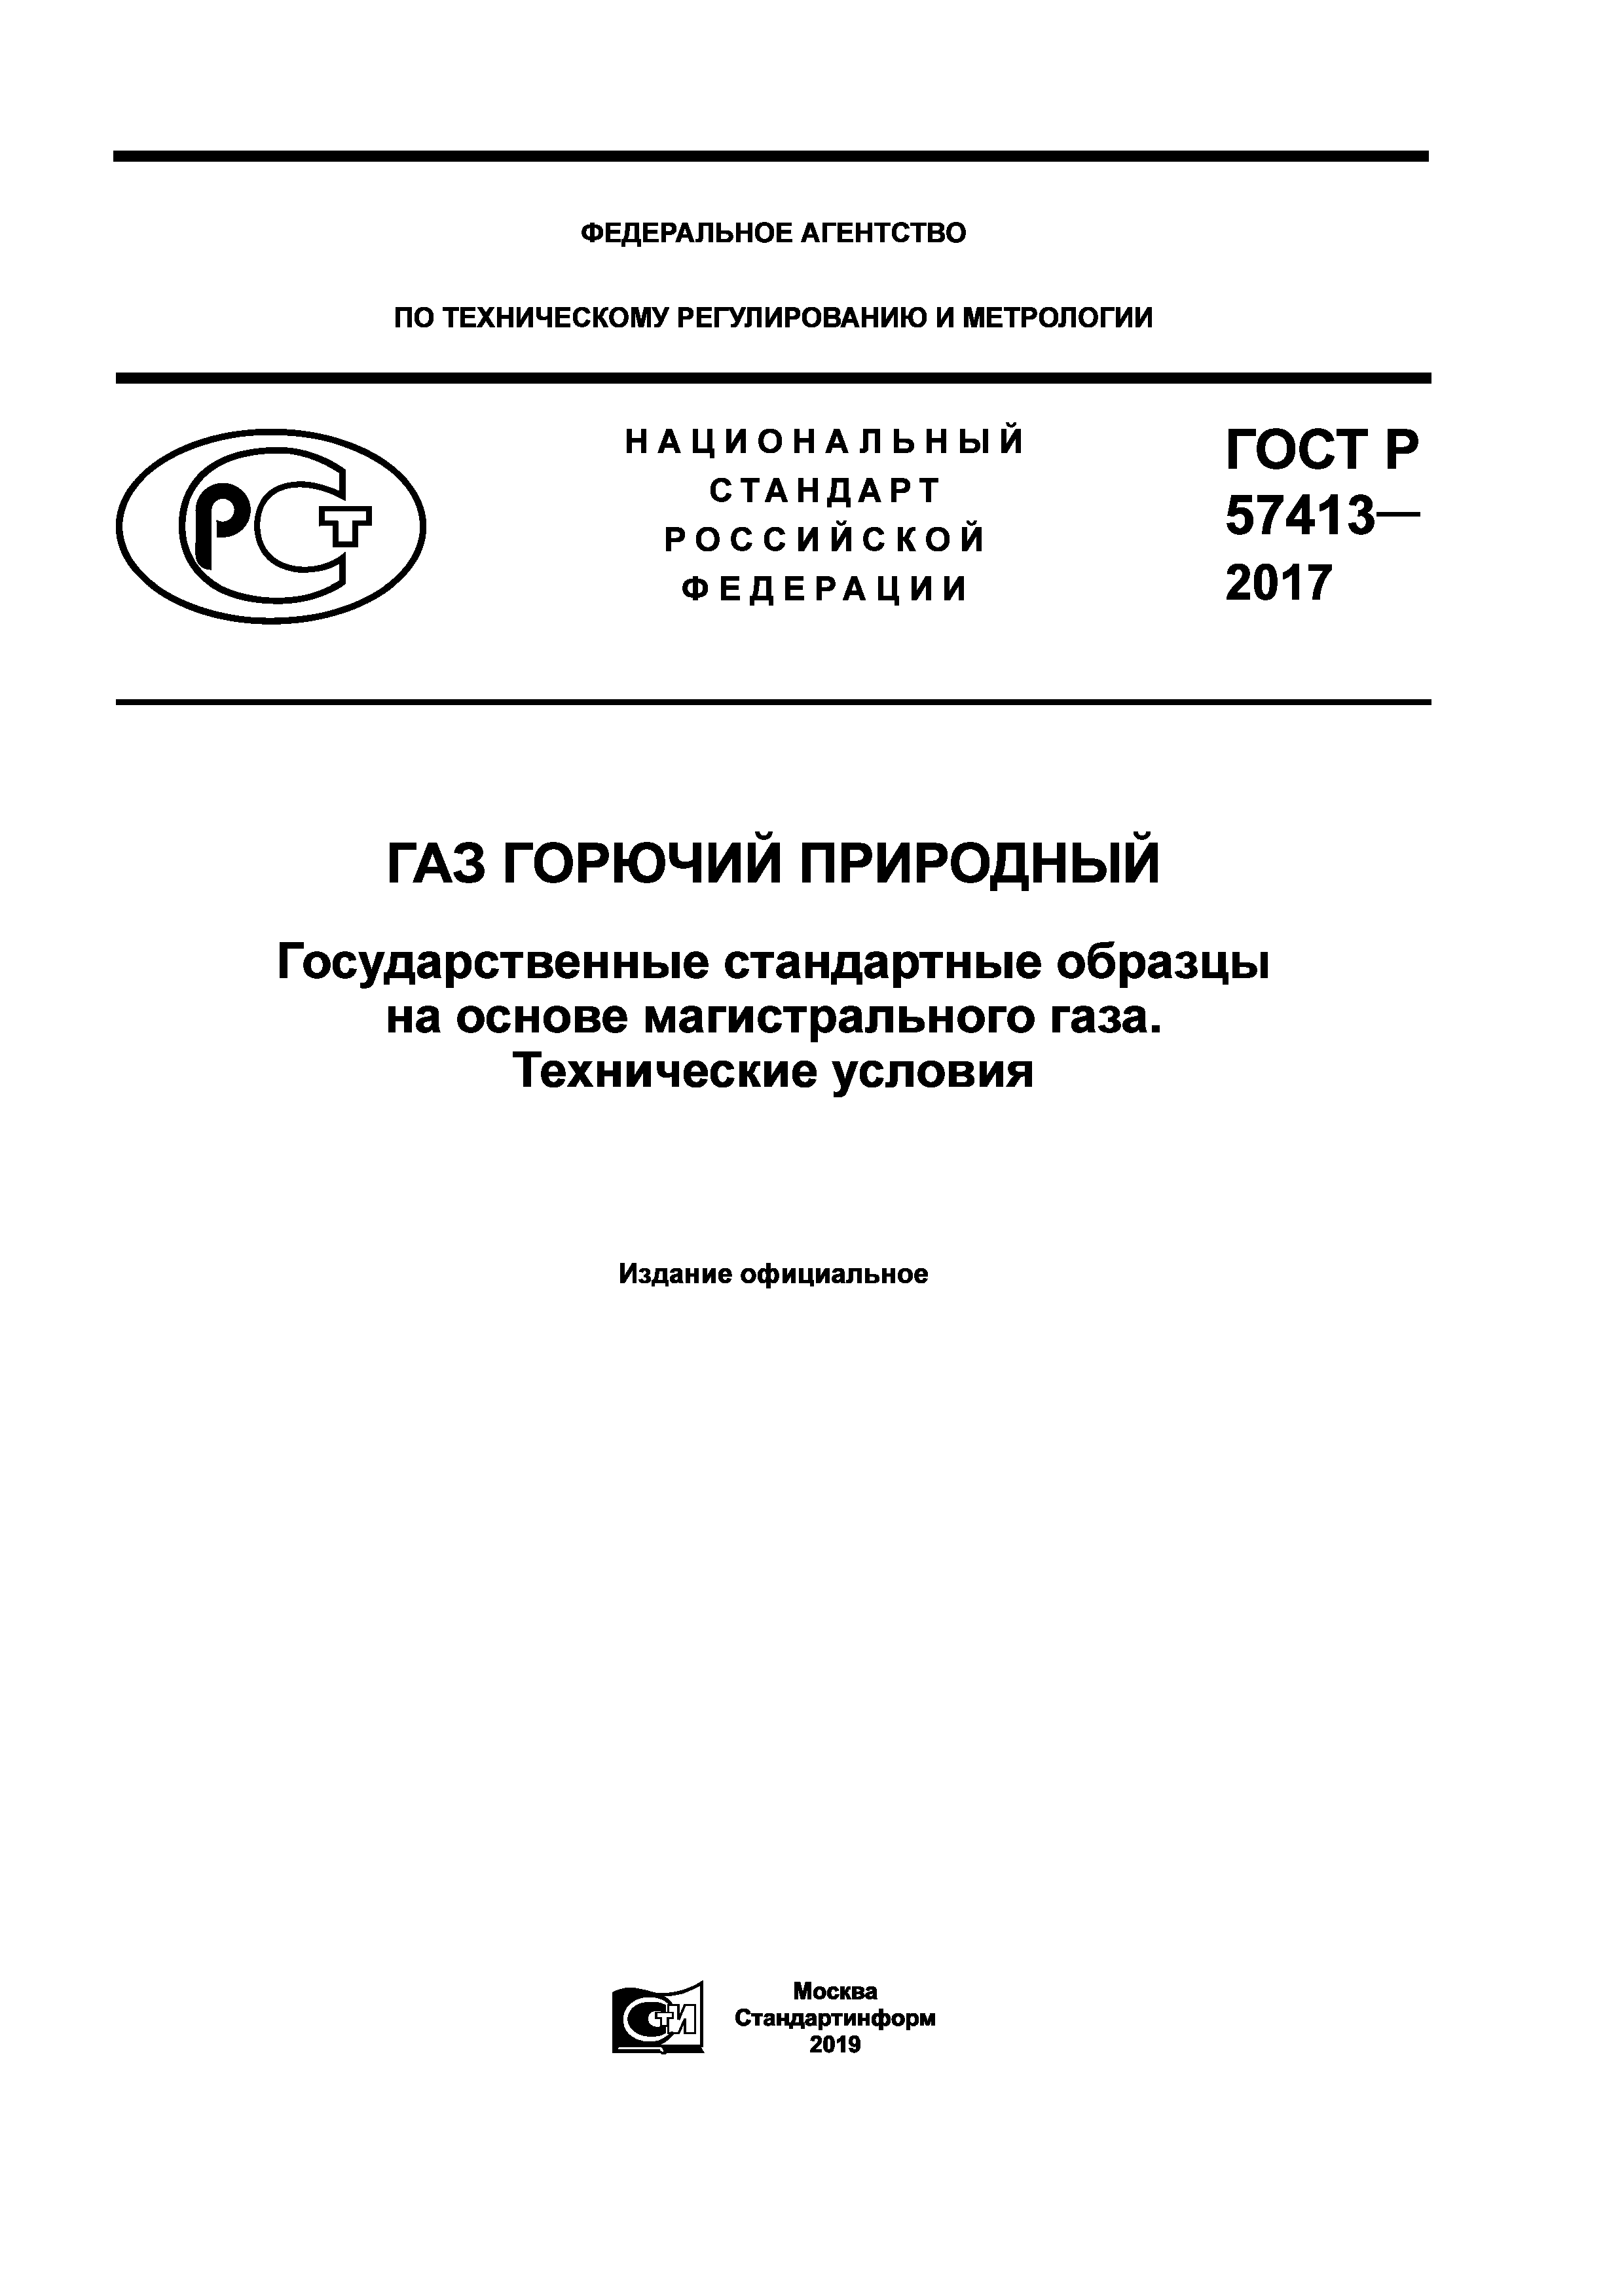 ГОСТ Р 57413-2017